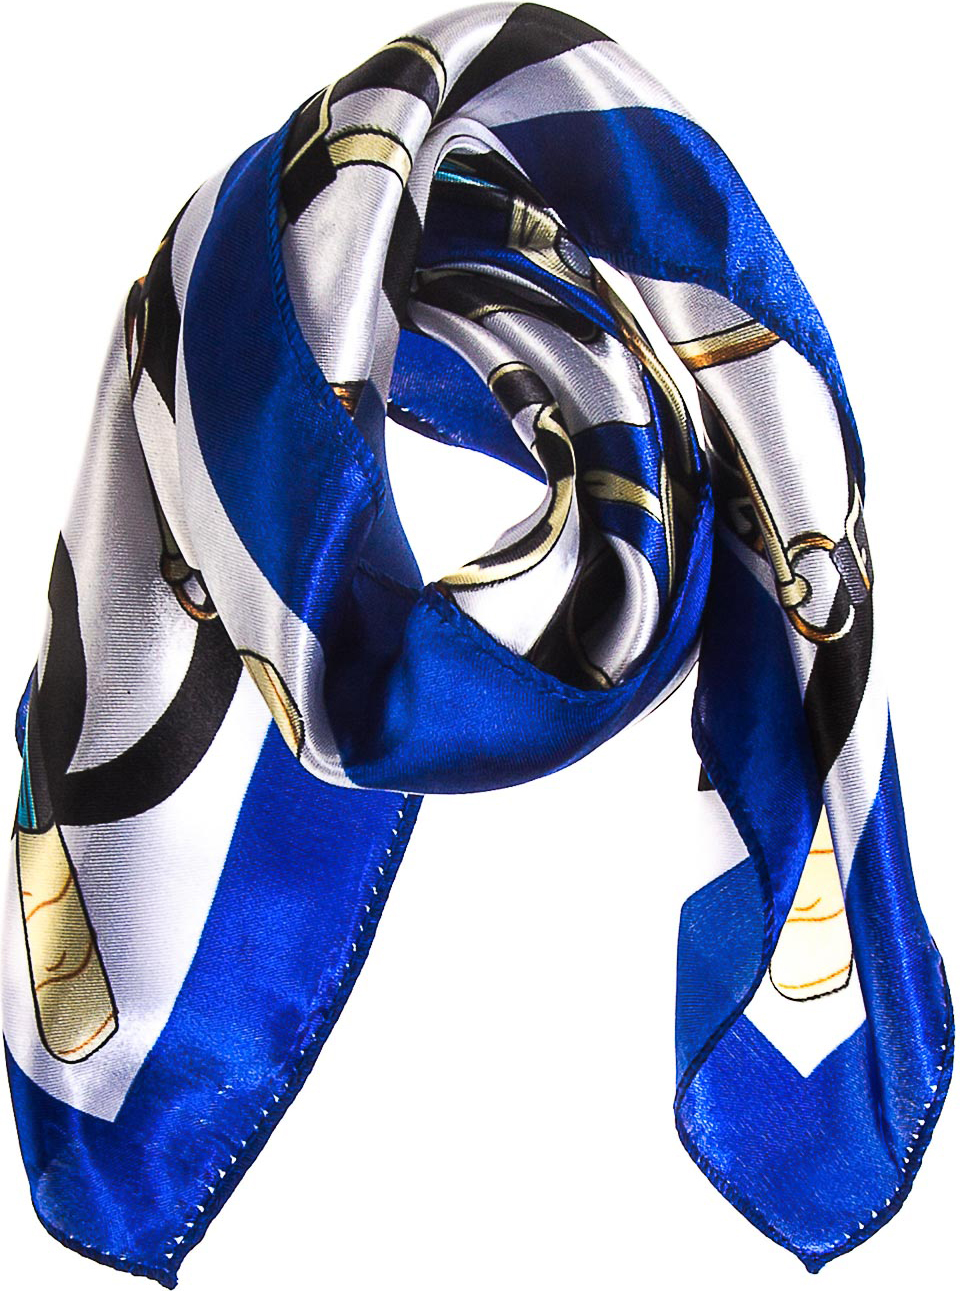 Платок женский Vittorio Richi, цвет: белый, синий. K0550PL337. Размер 50 х 50 см